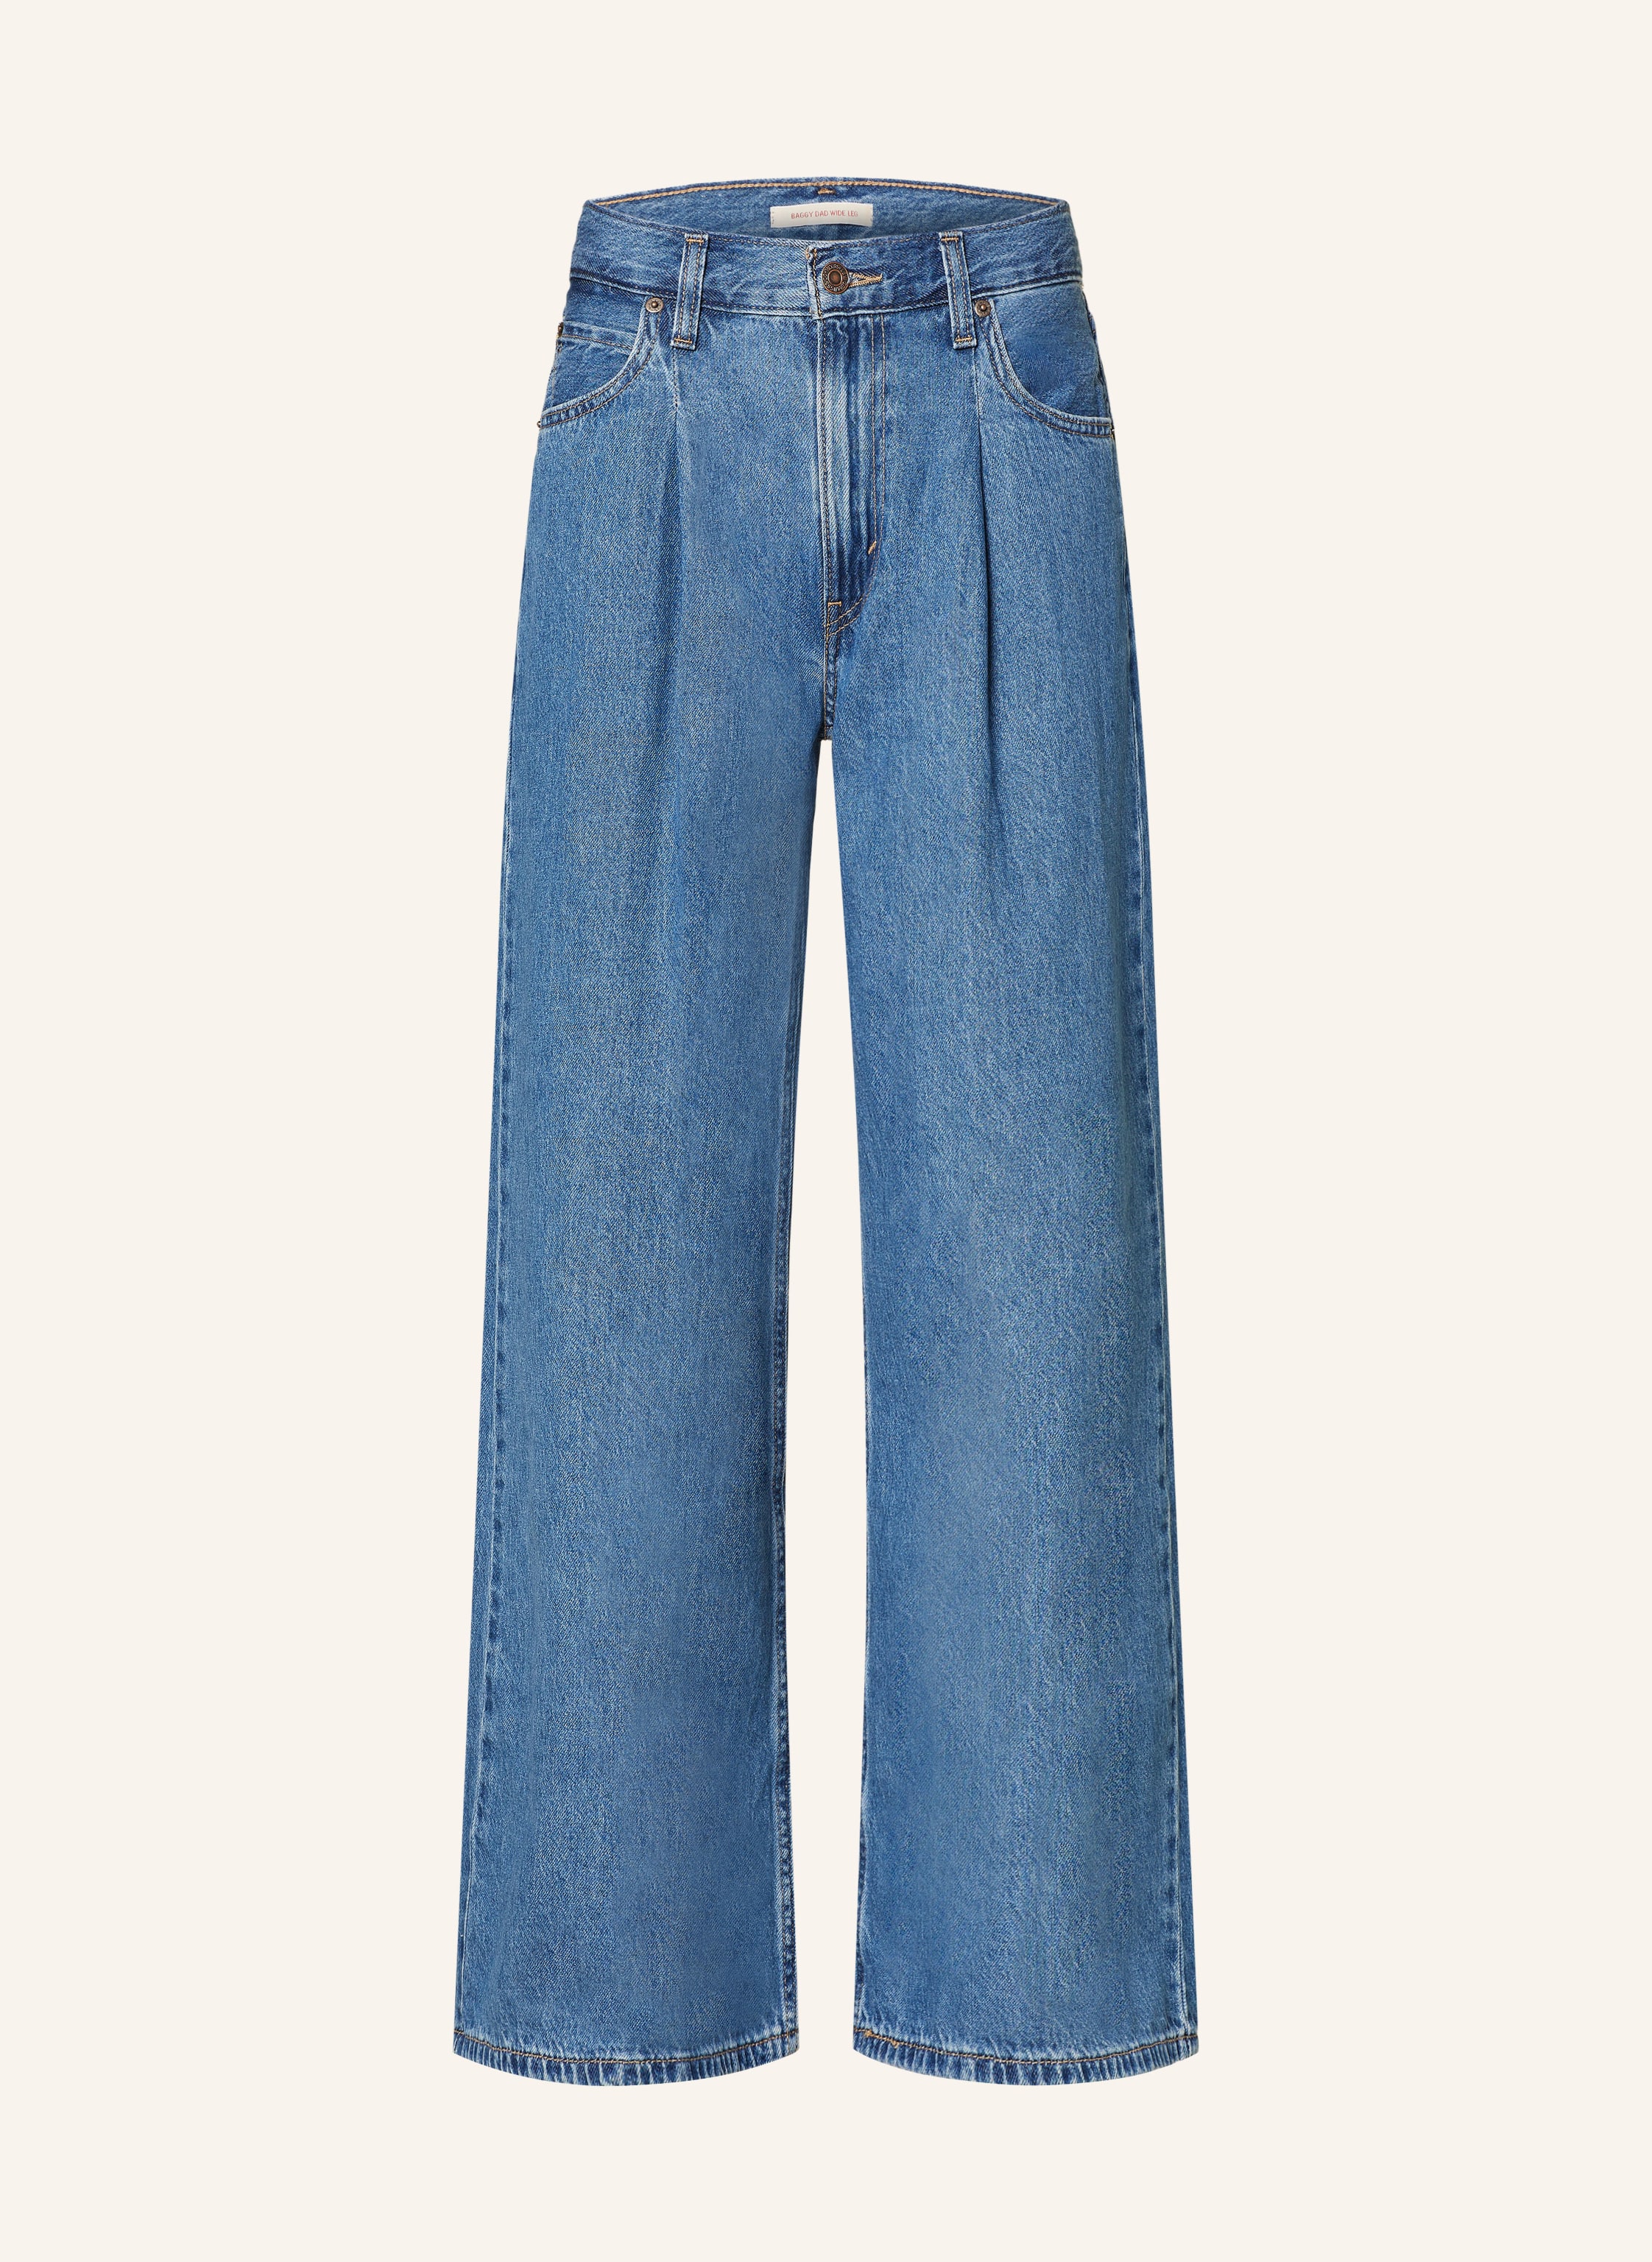 Baggy dad jean, Levi's, Women's Bootcut Jeans Online